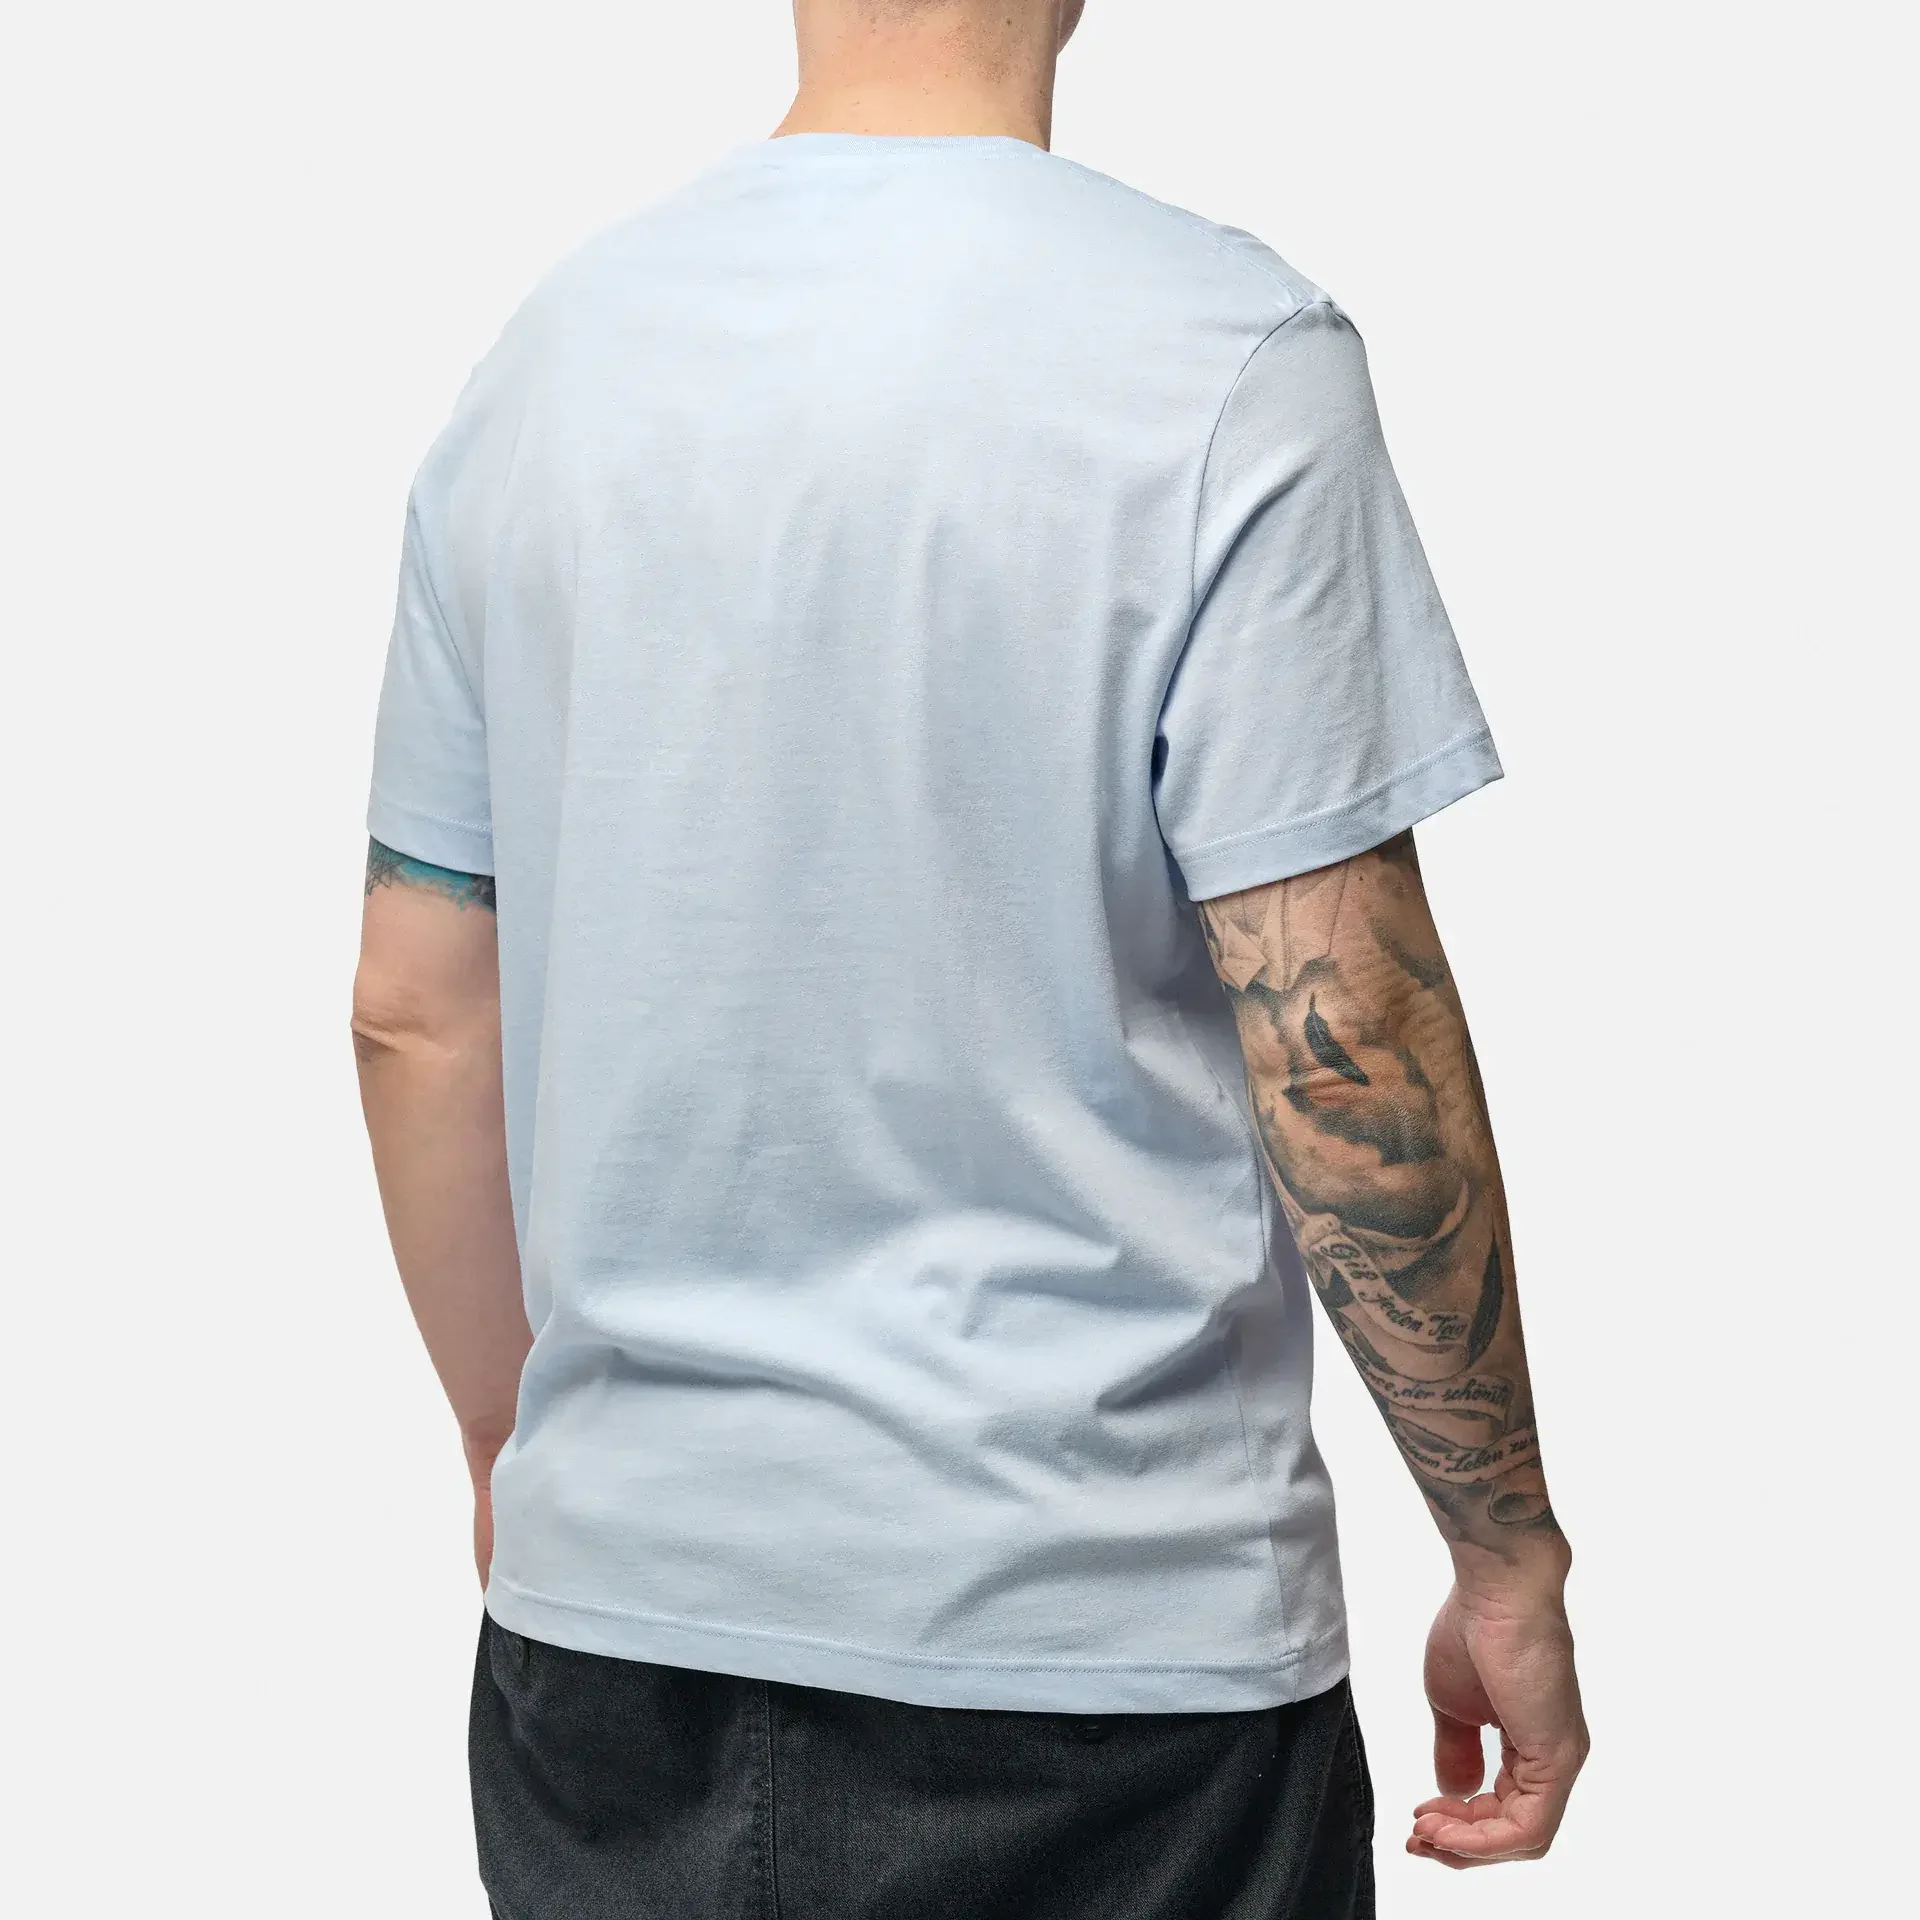 Lacoste Graphic Print Jersey T-Shirt Phoenix